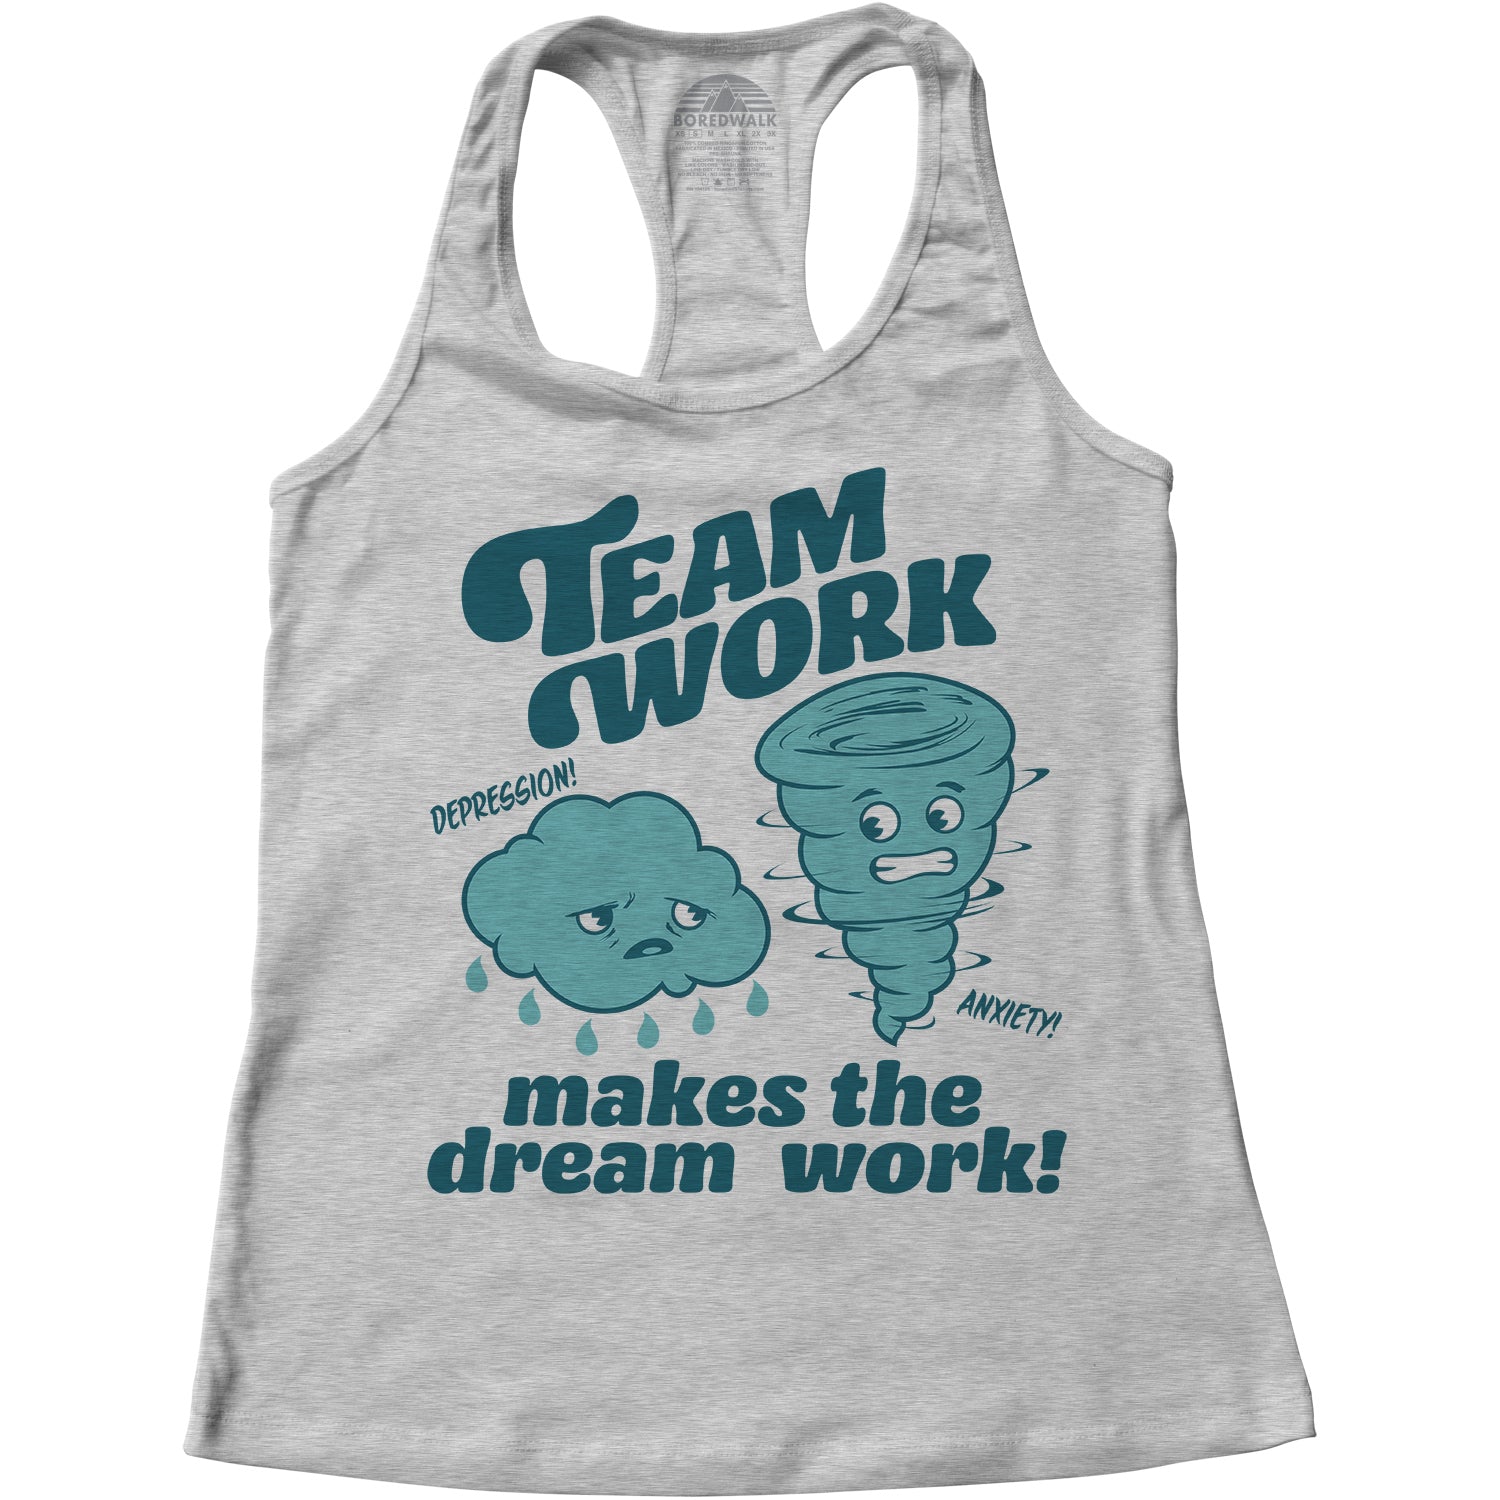 Women's Team Work Makes the Dream Work Racerback Tank Top